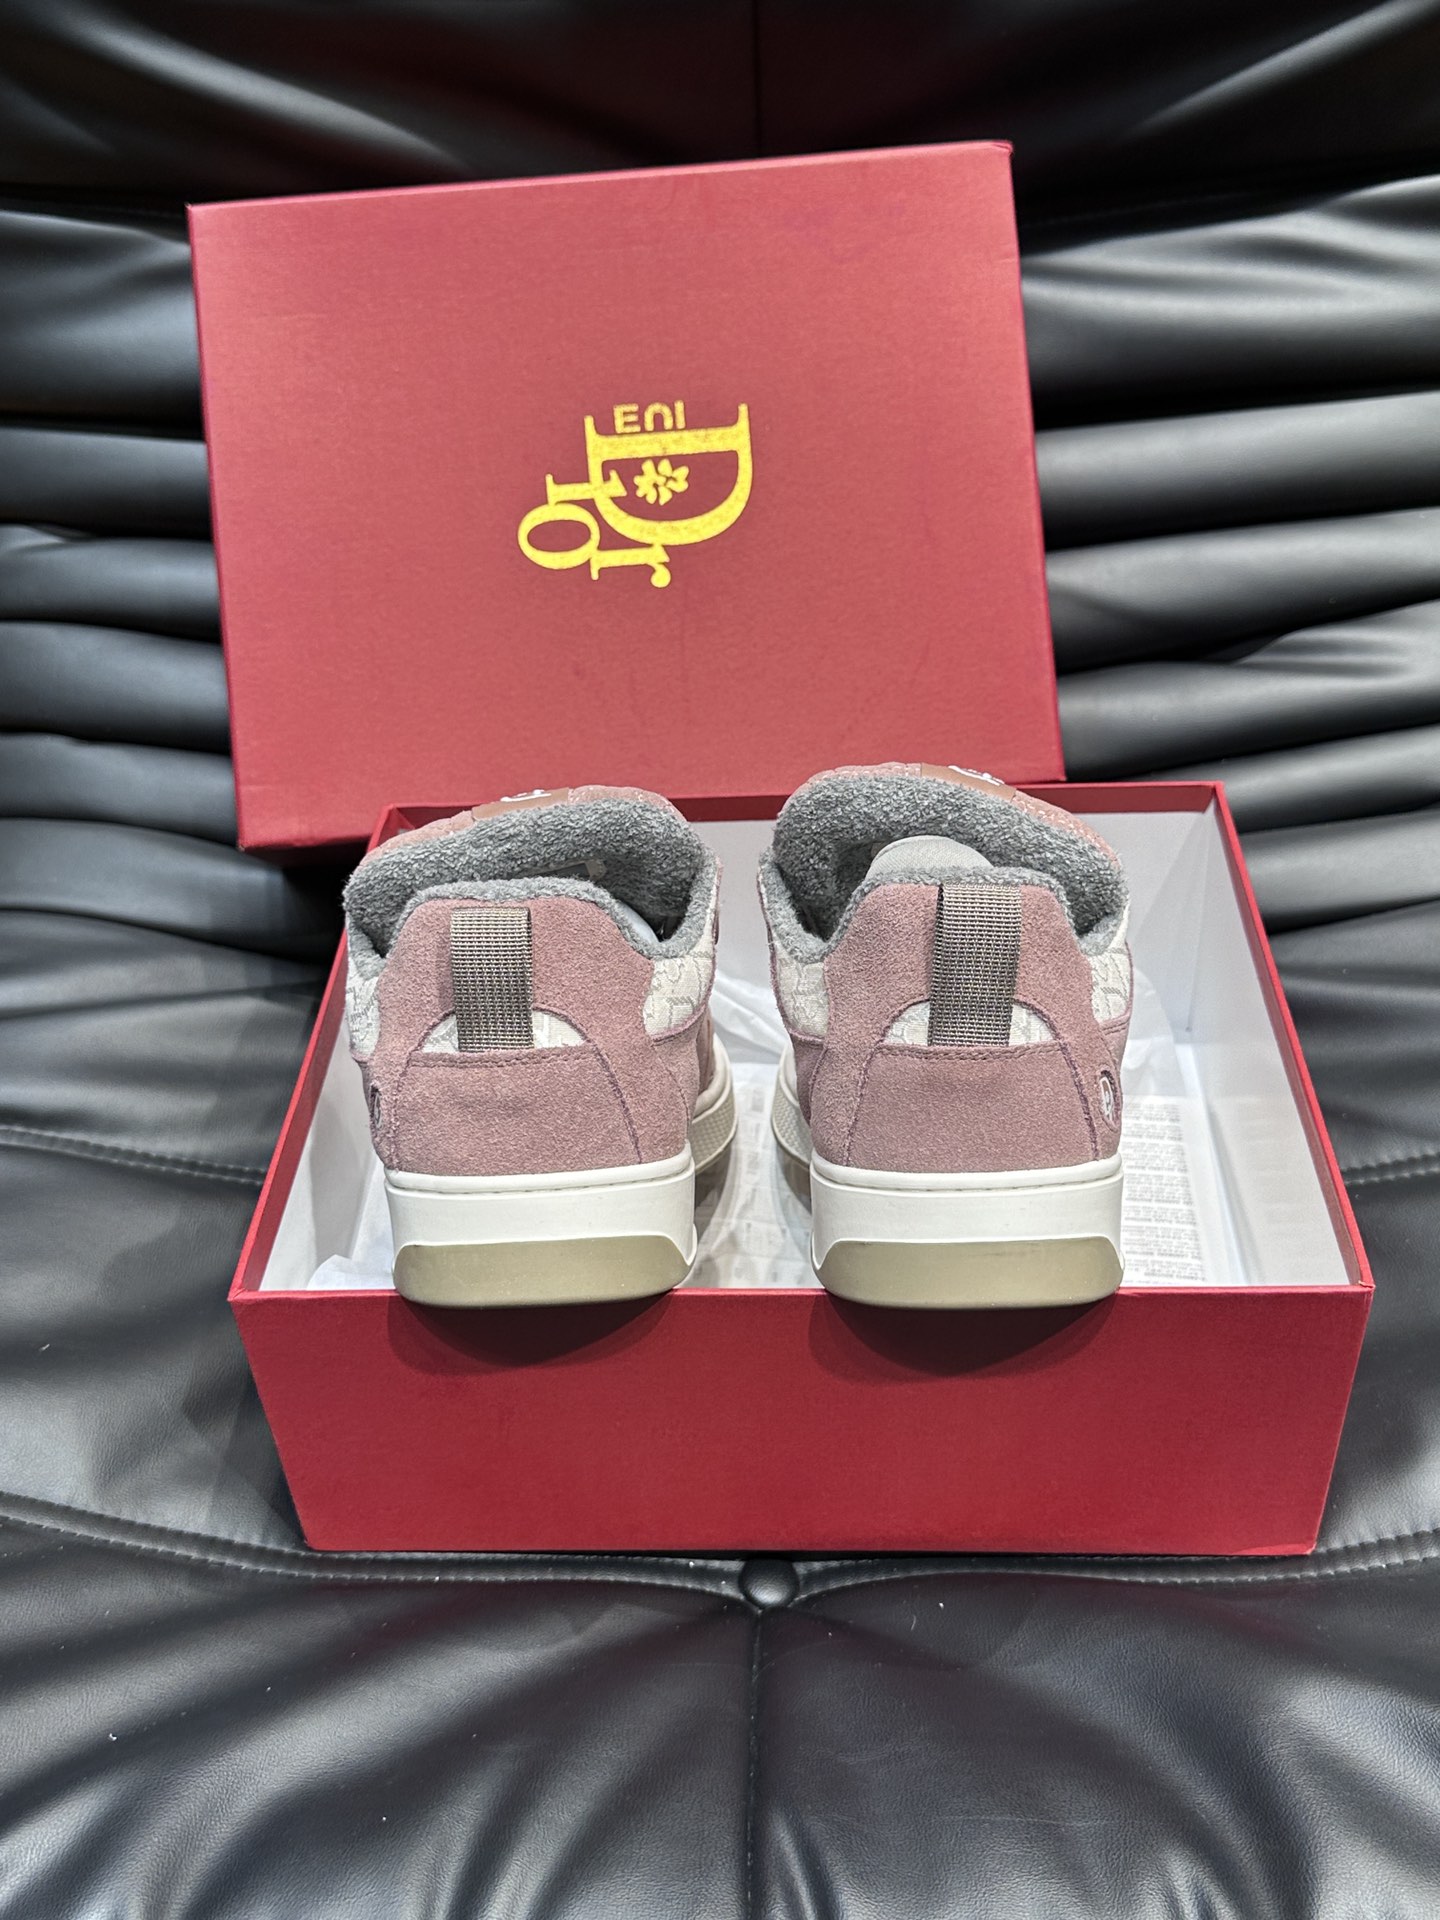 ️️DiorxERL新款春季限定联名款情侣休闲鞋大舌头滑板运动鞋由DiorMan鞋履设计师ThiboDe